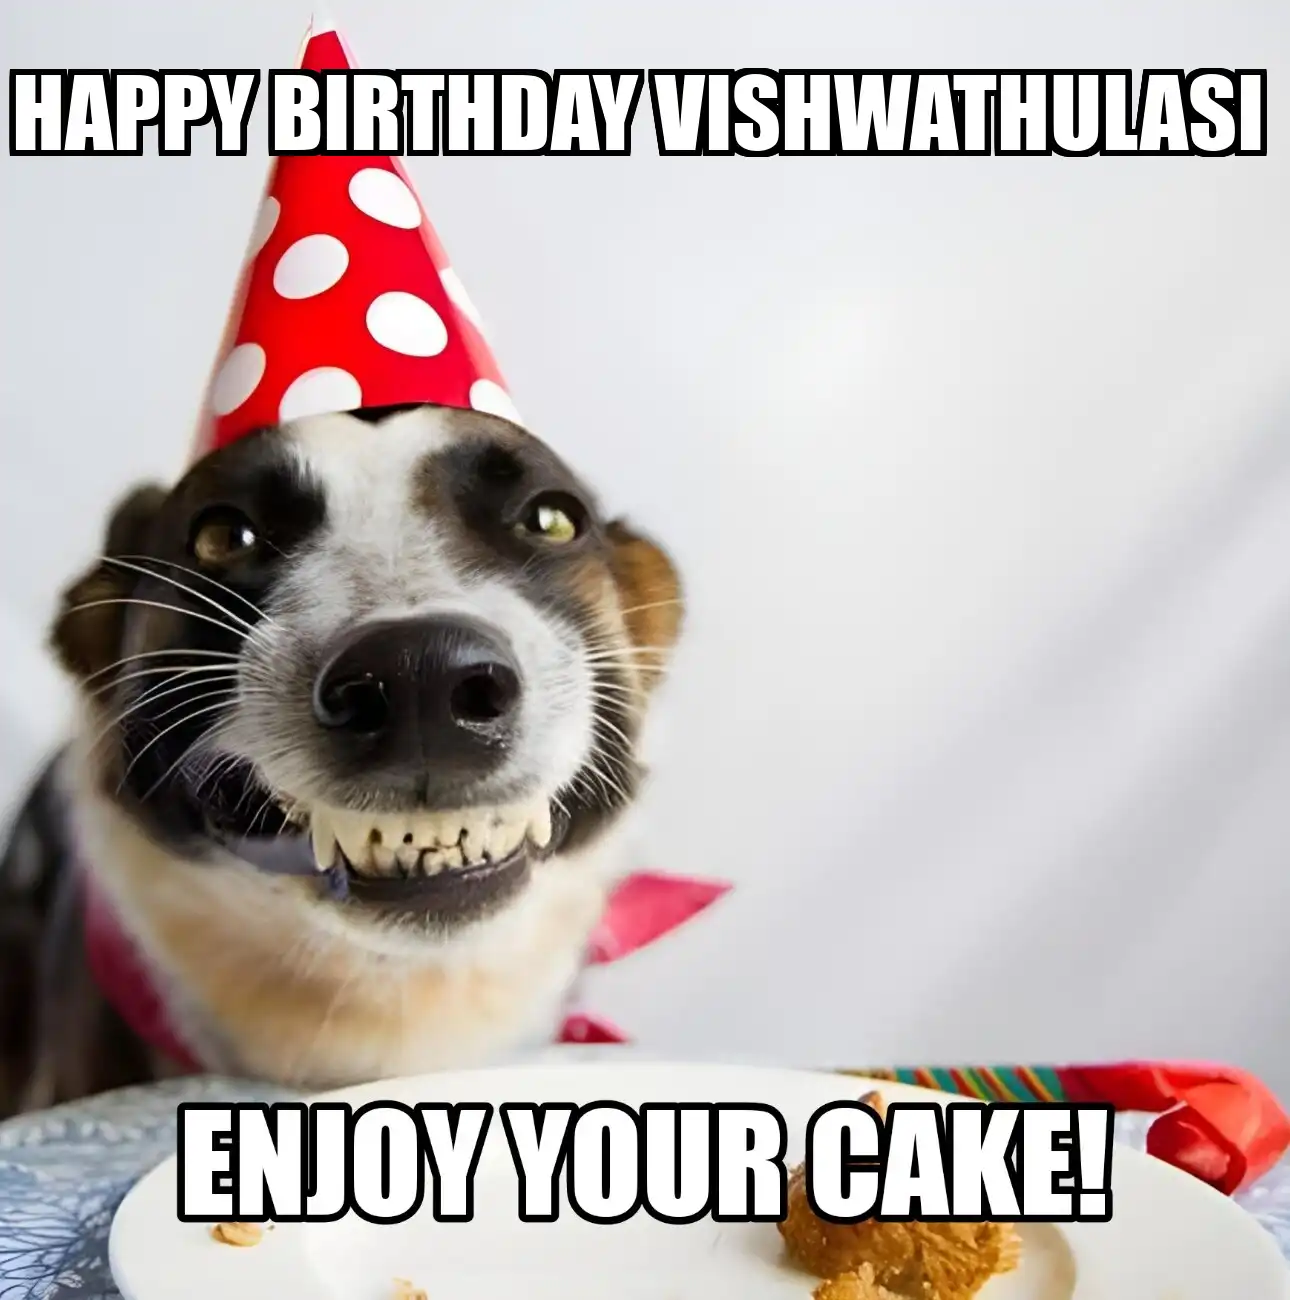 Happy Birthday Vishwathulasi Enjoy Your Cake Dog Meme